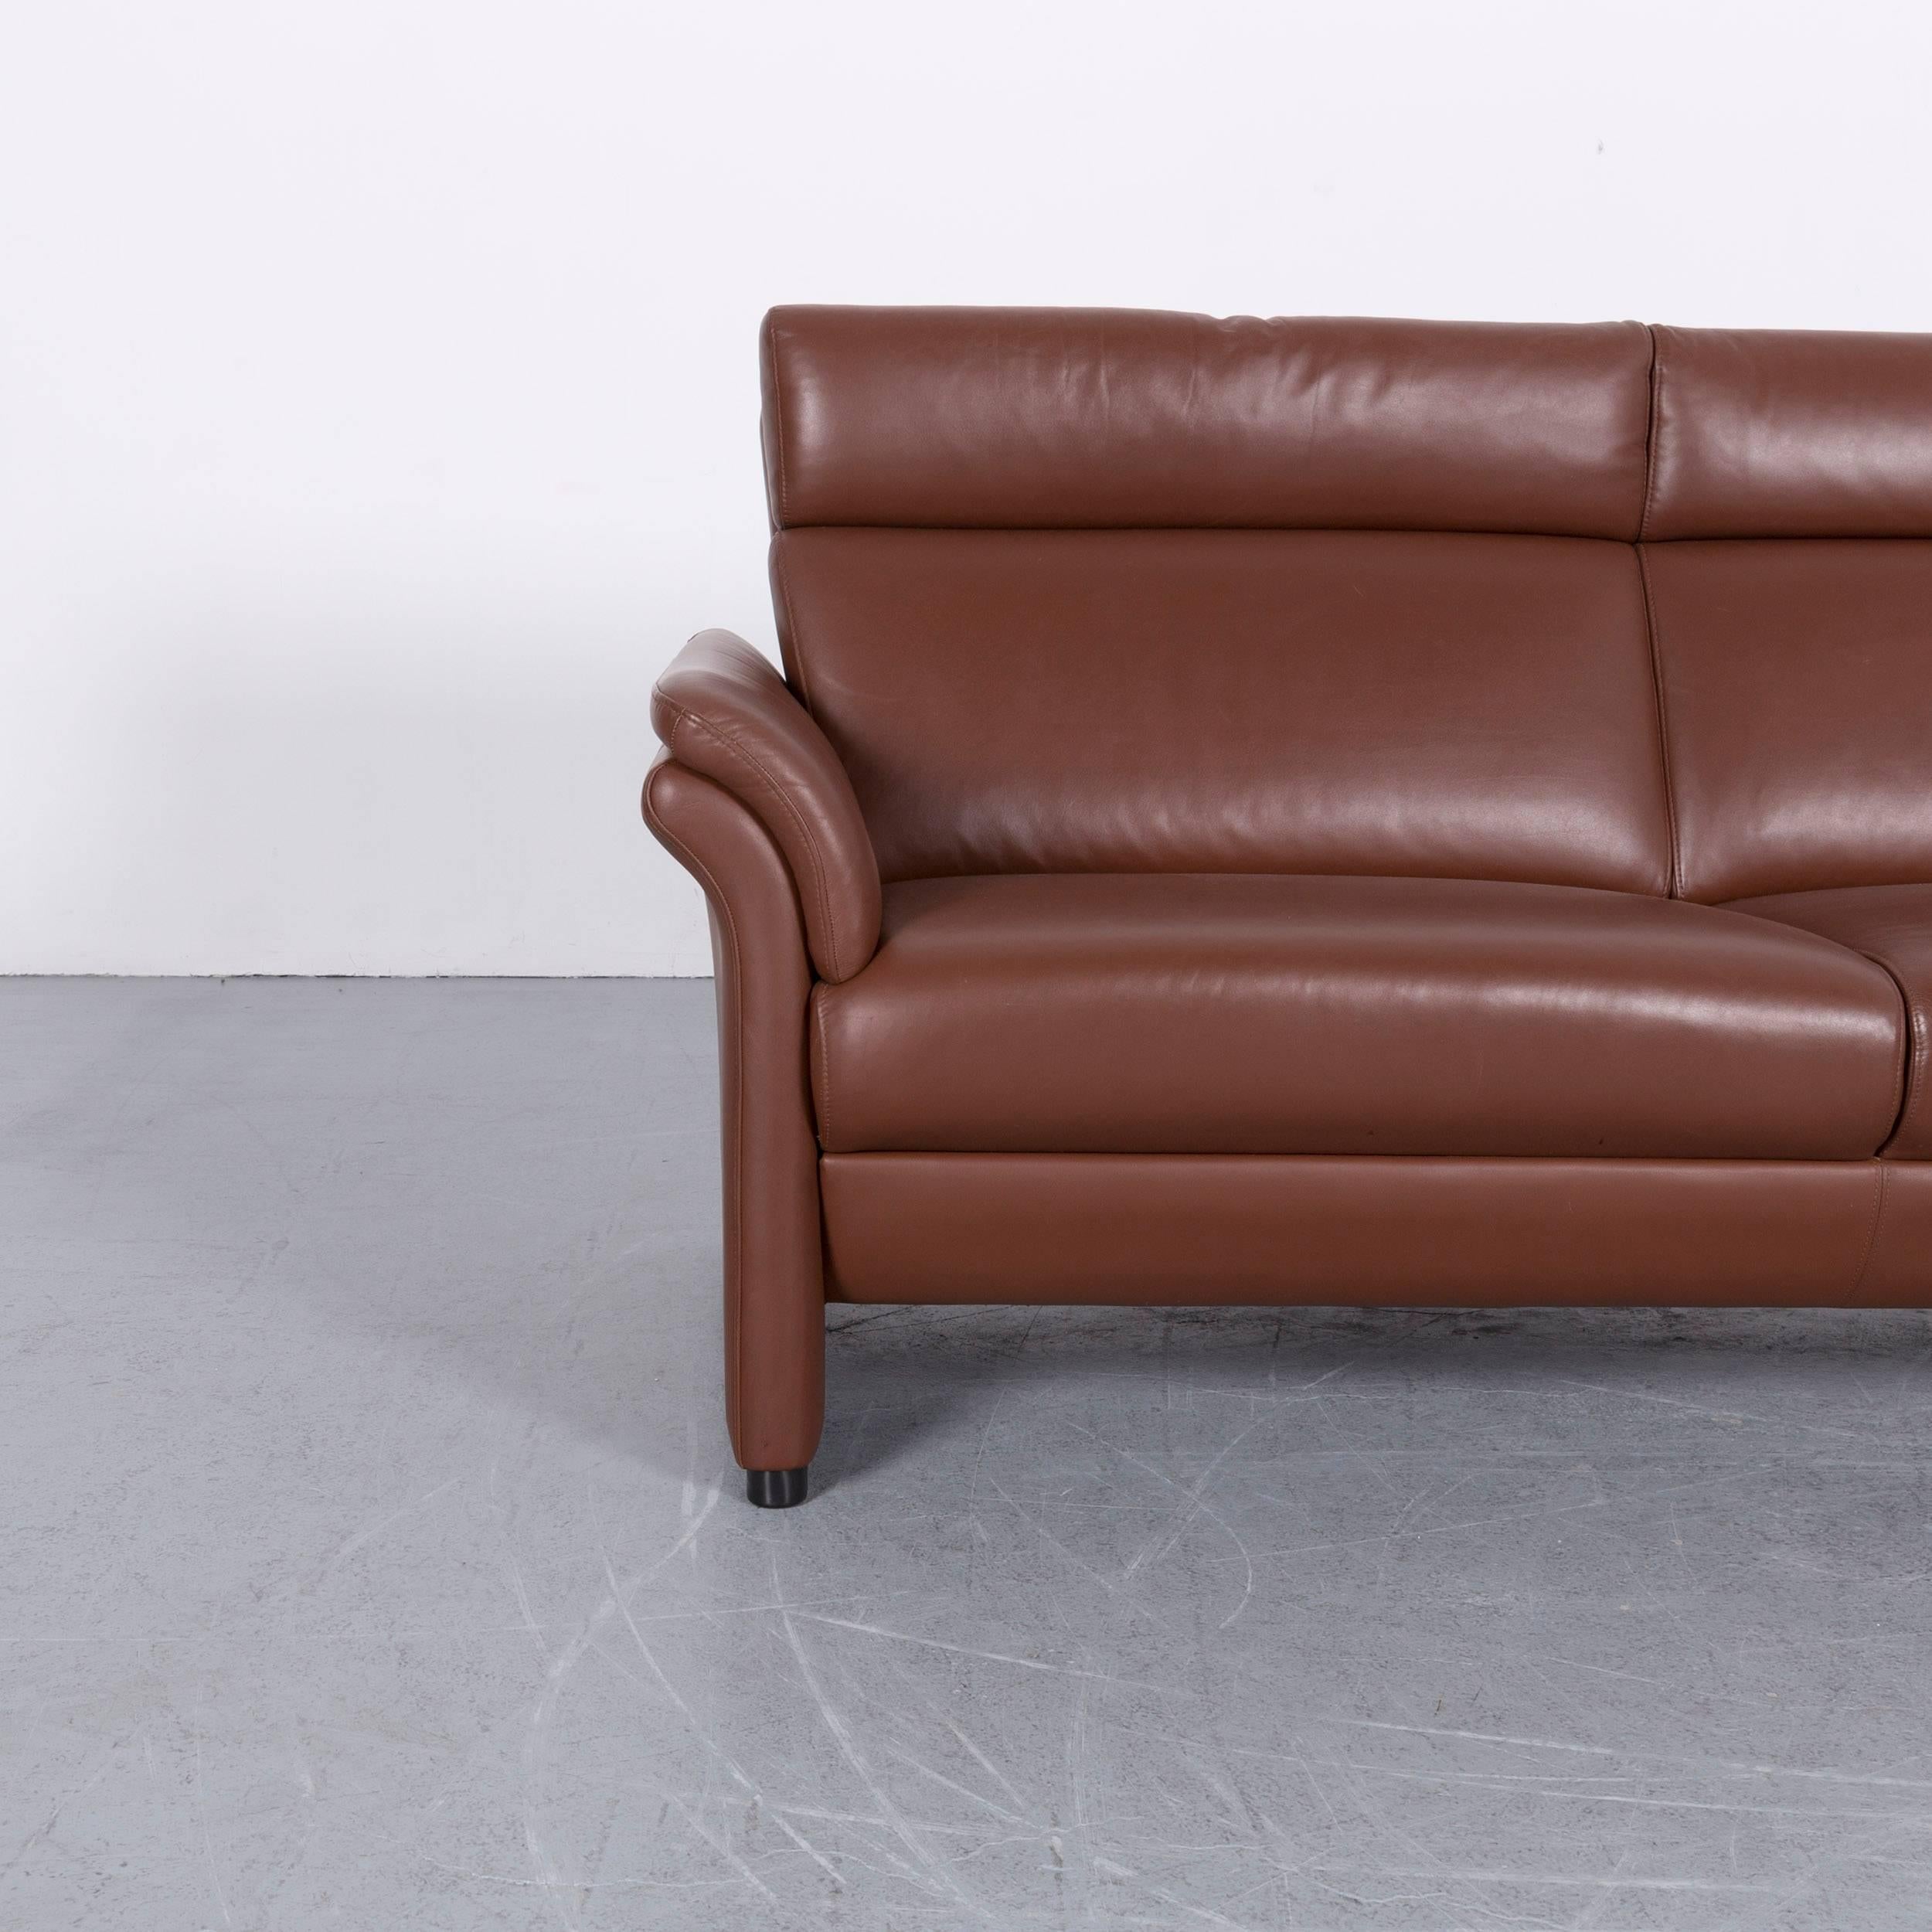 German Erpo Designer Leather Sofa Set Brown Two-Seat, Armchair, Foot-Stool